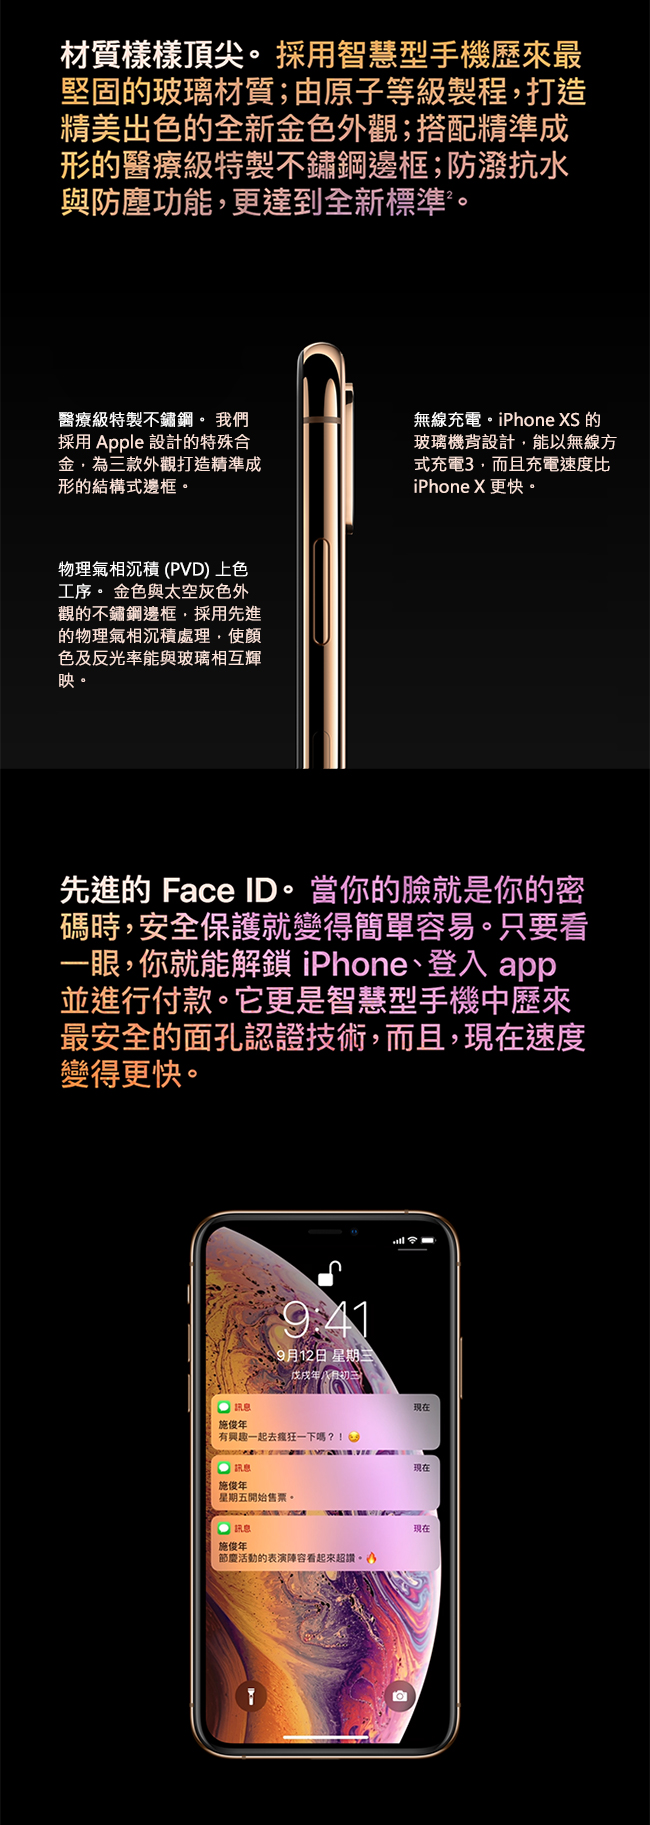 Apple iPhone Xs Max 512G 6.5吋智慧型手機